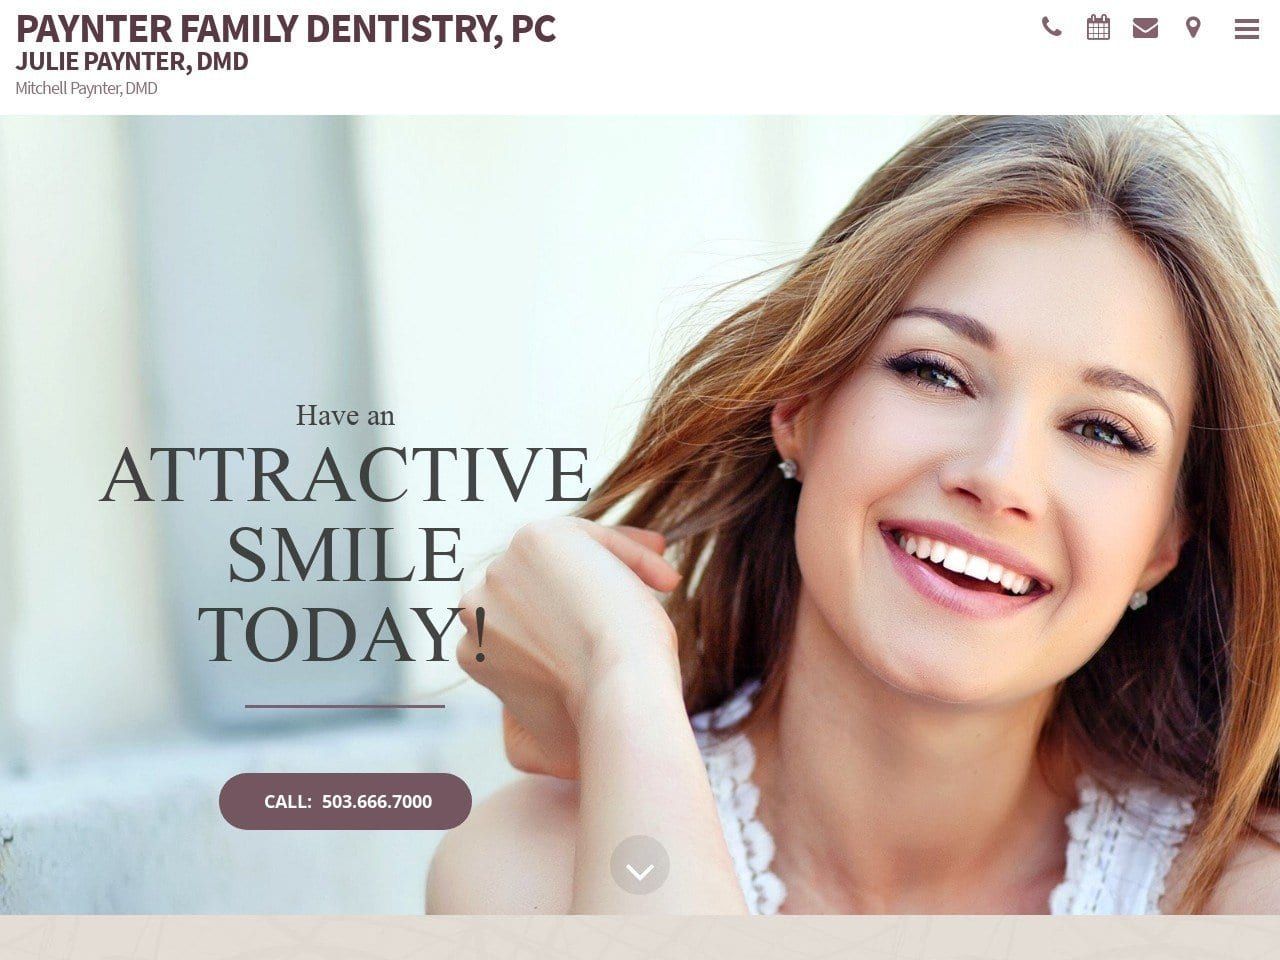 Paynter Family Dentistry Website Screenshot from paynterfamilydentistry.com